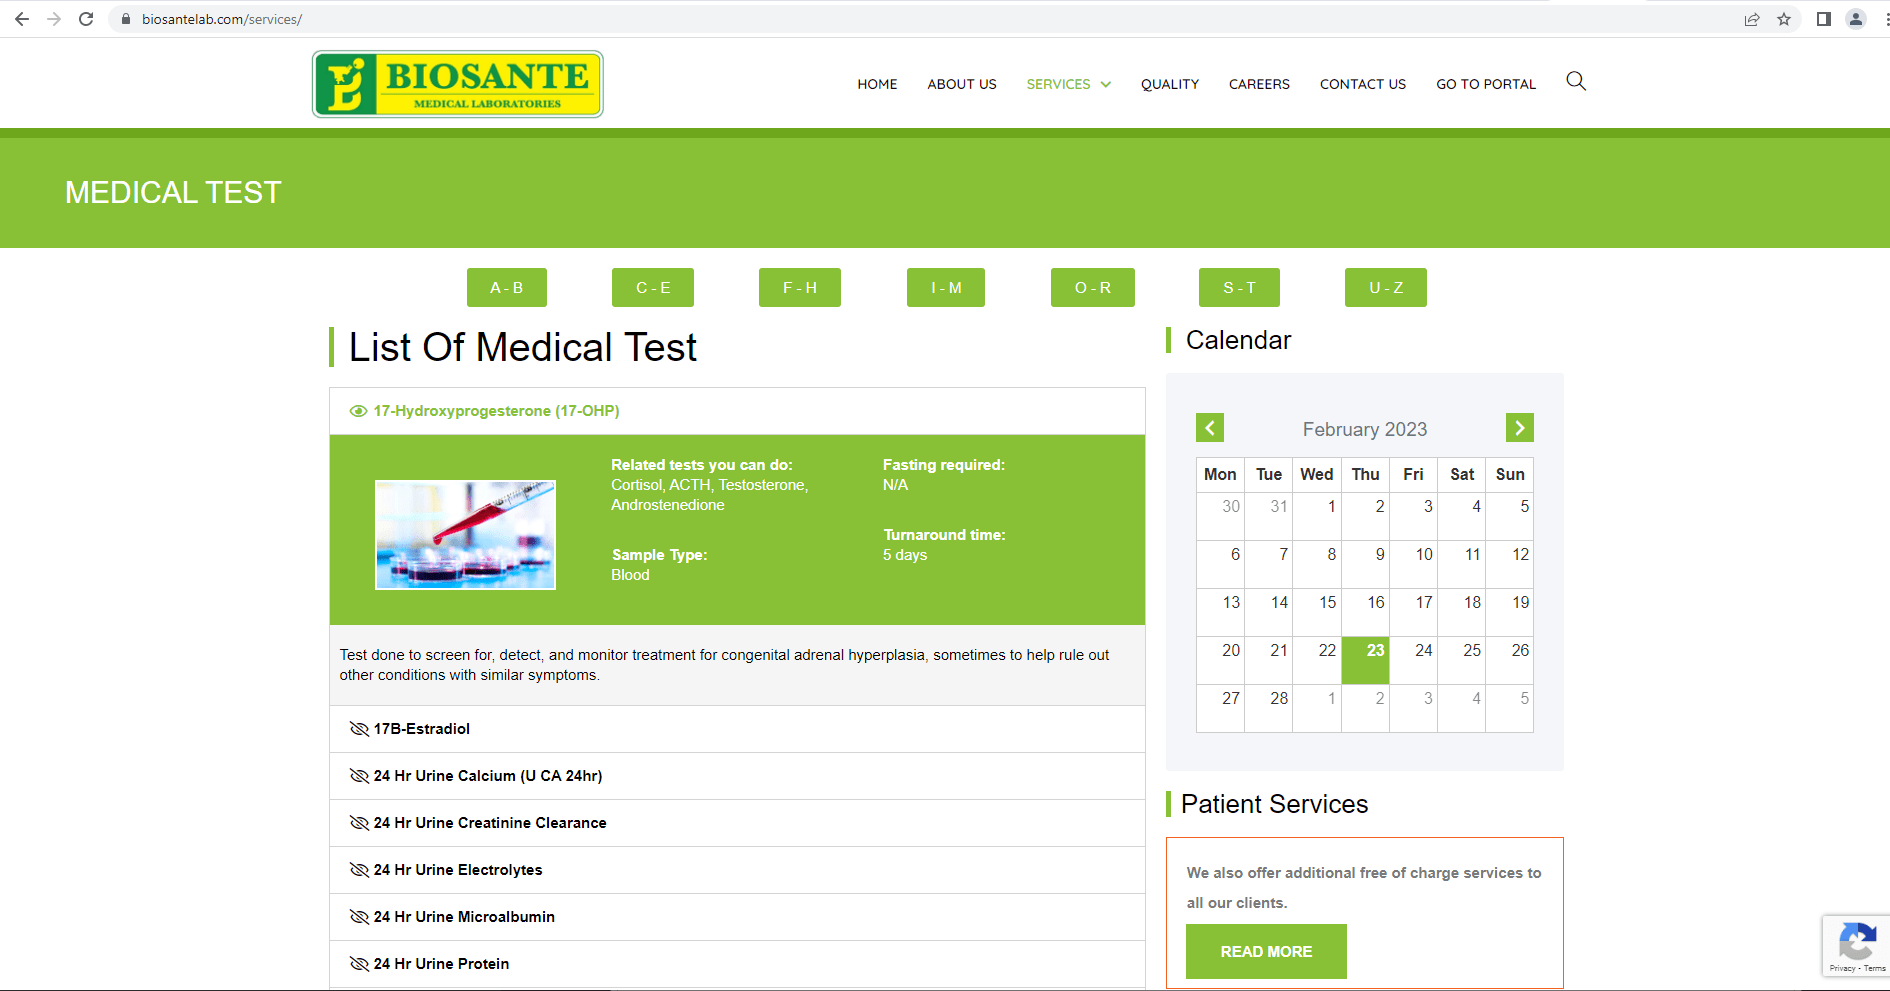 Biosante - List of Medical Test